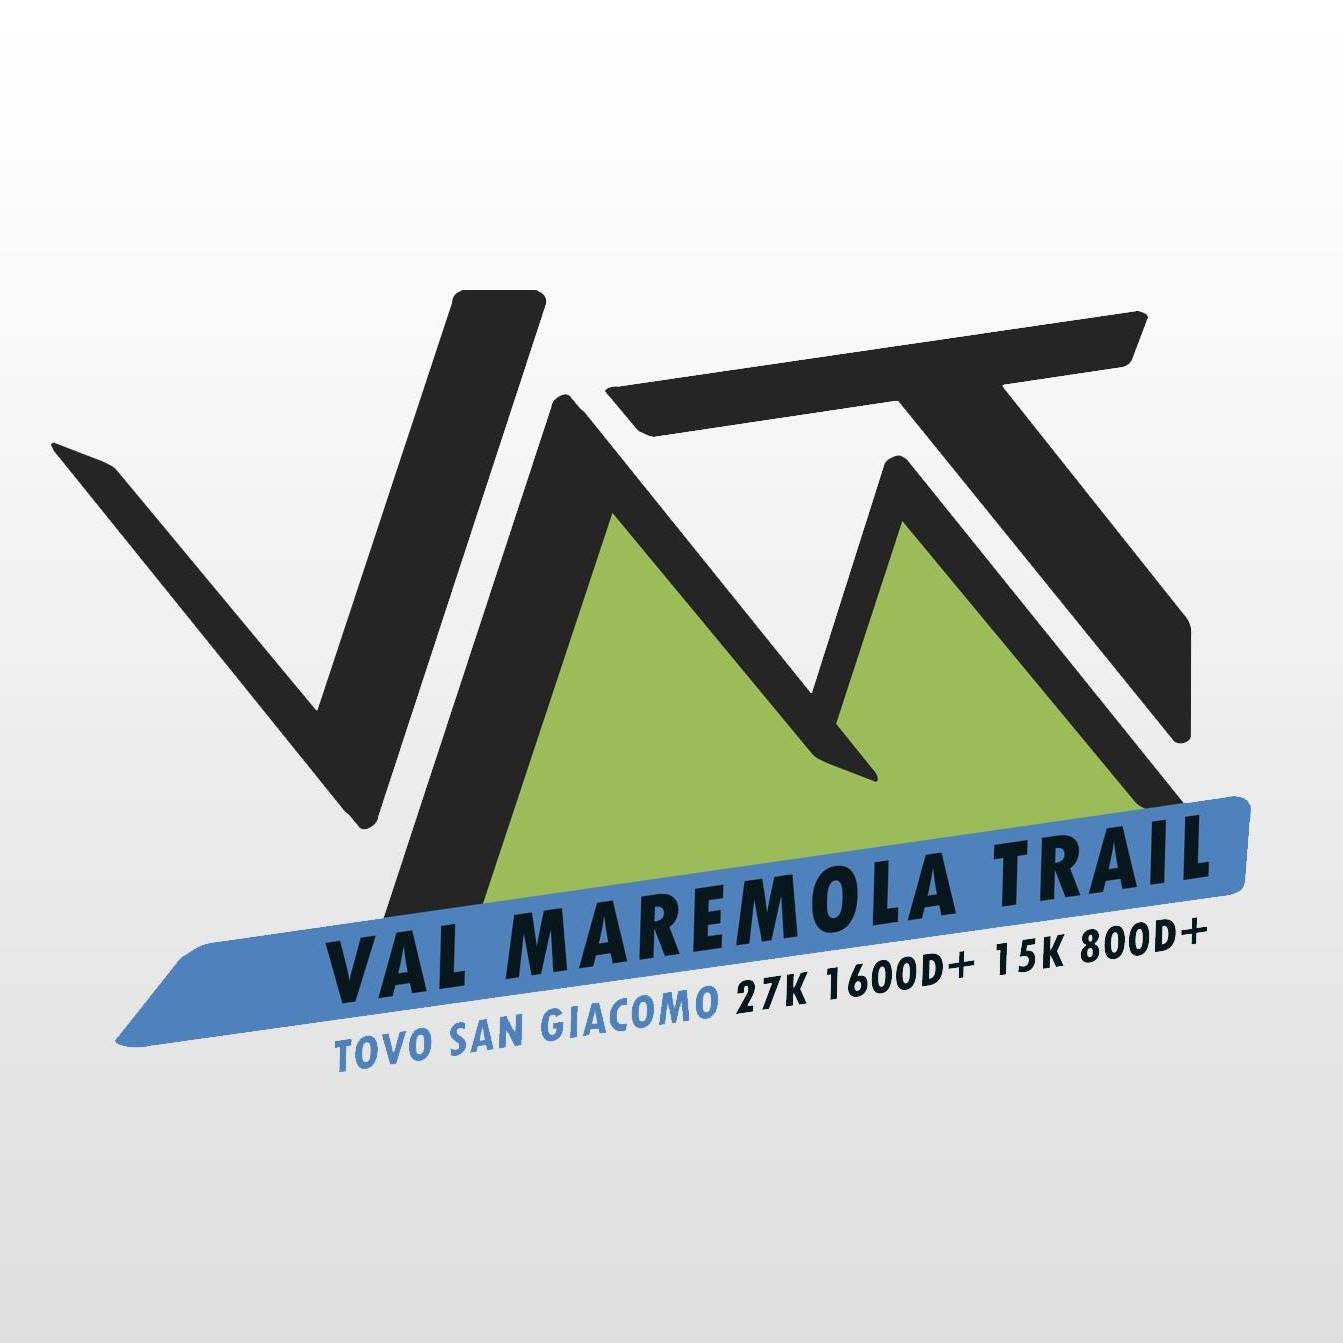 VAL MAREMOLA TRAIL - AAA